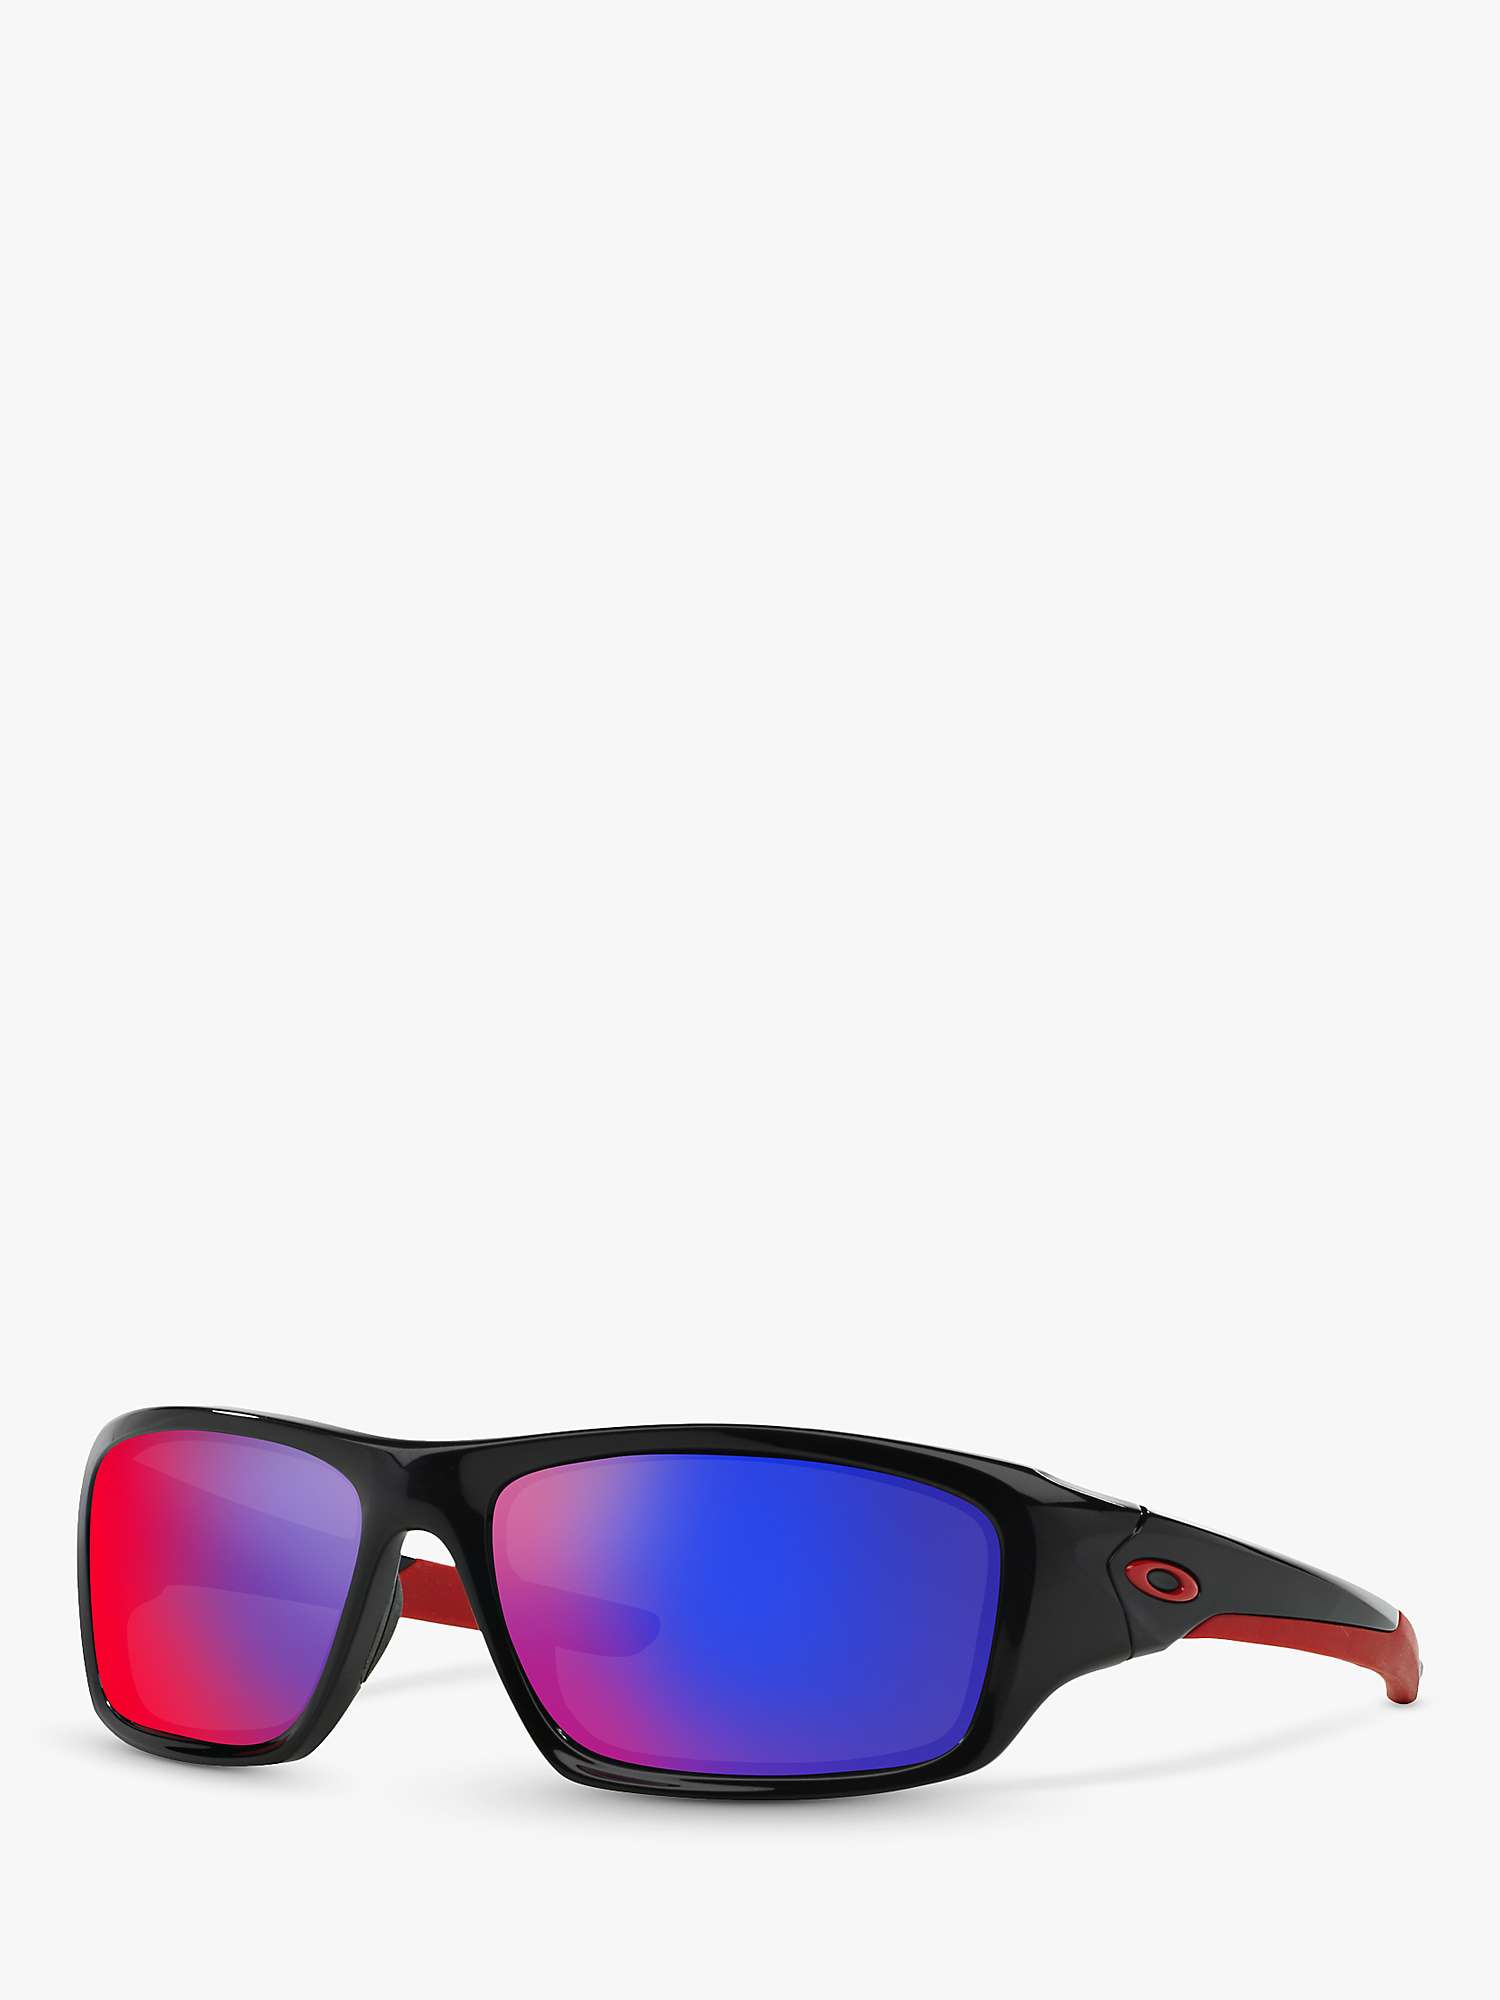 Buy Oakley OO9236 Men's Valve Rectangular Sunglasses Online at johnlewis.com